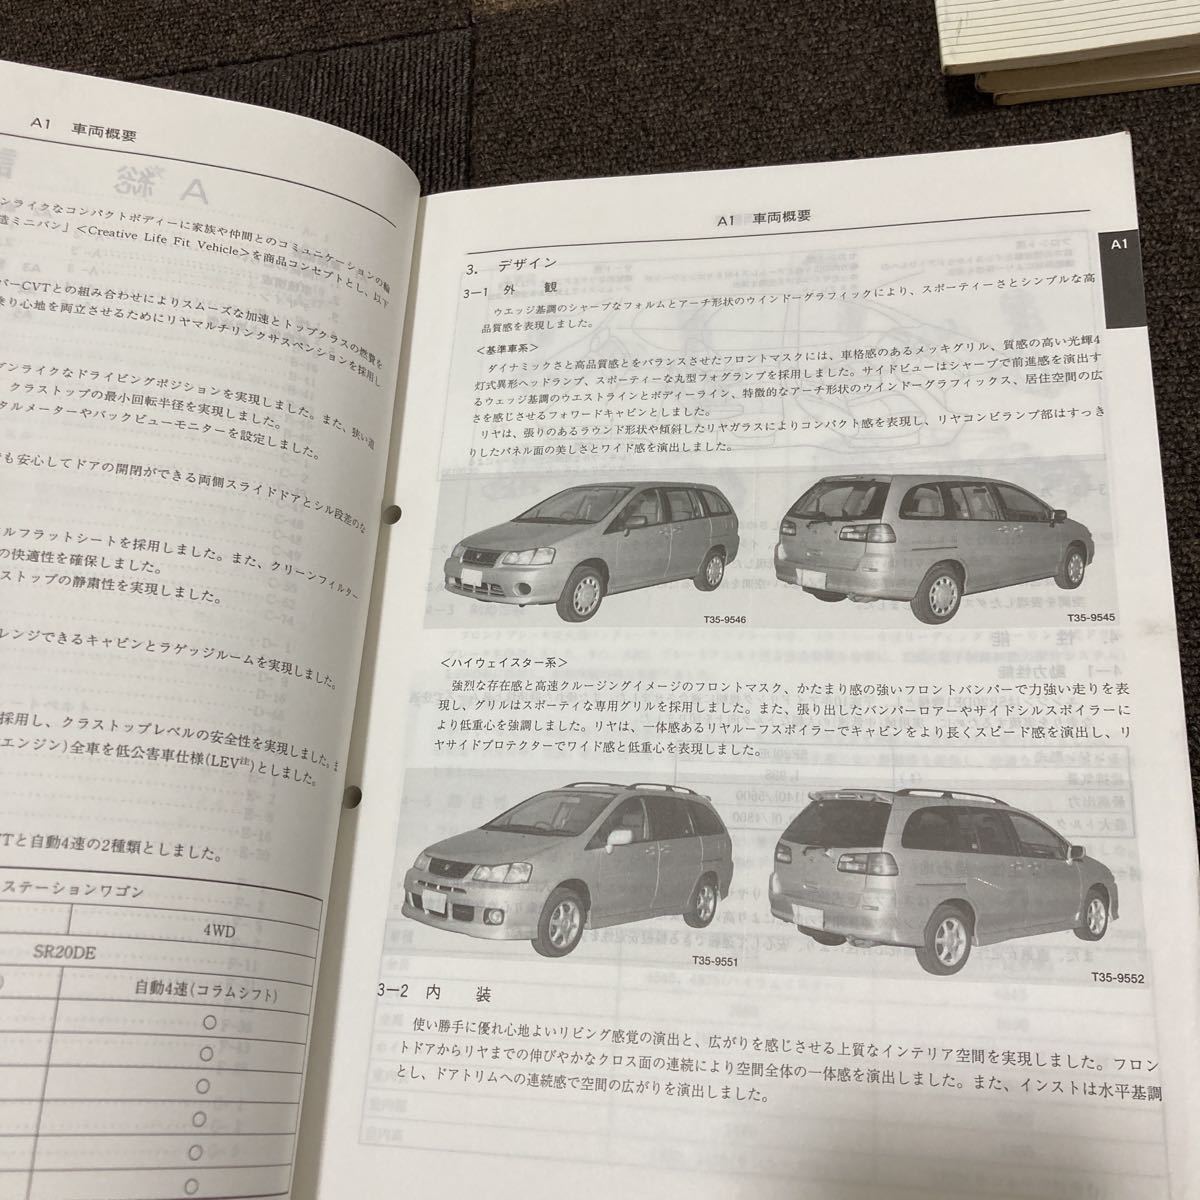  Nissan M12 Prairie Liberty new model manual supplement version 1.2.3.4 total 5 pcs. service manual repair book service book SR20DE